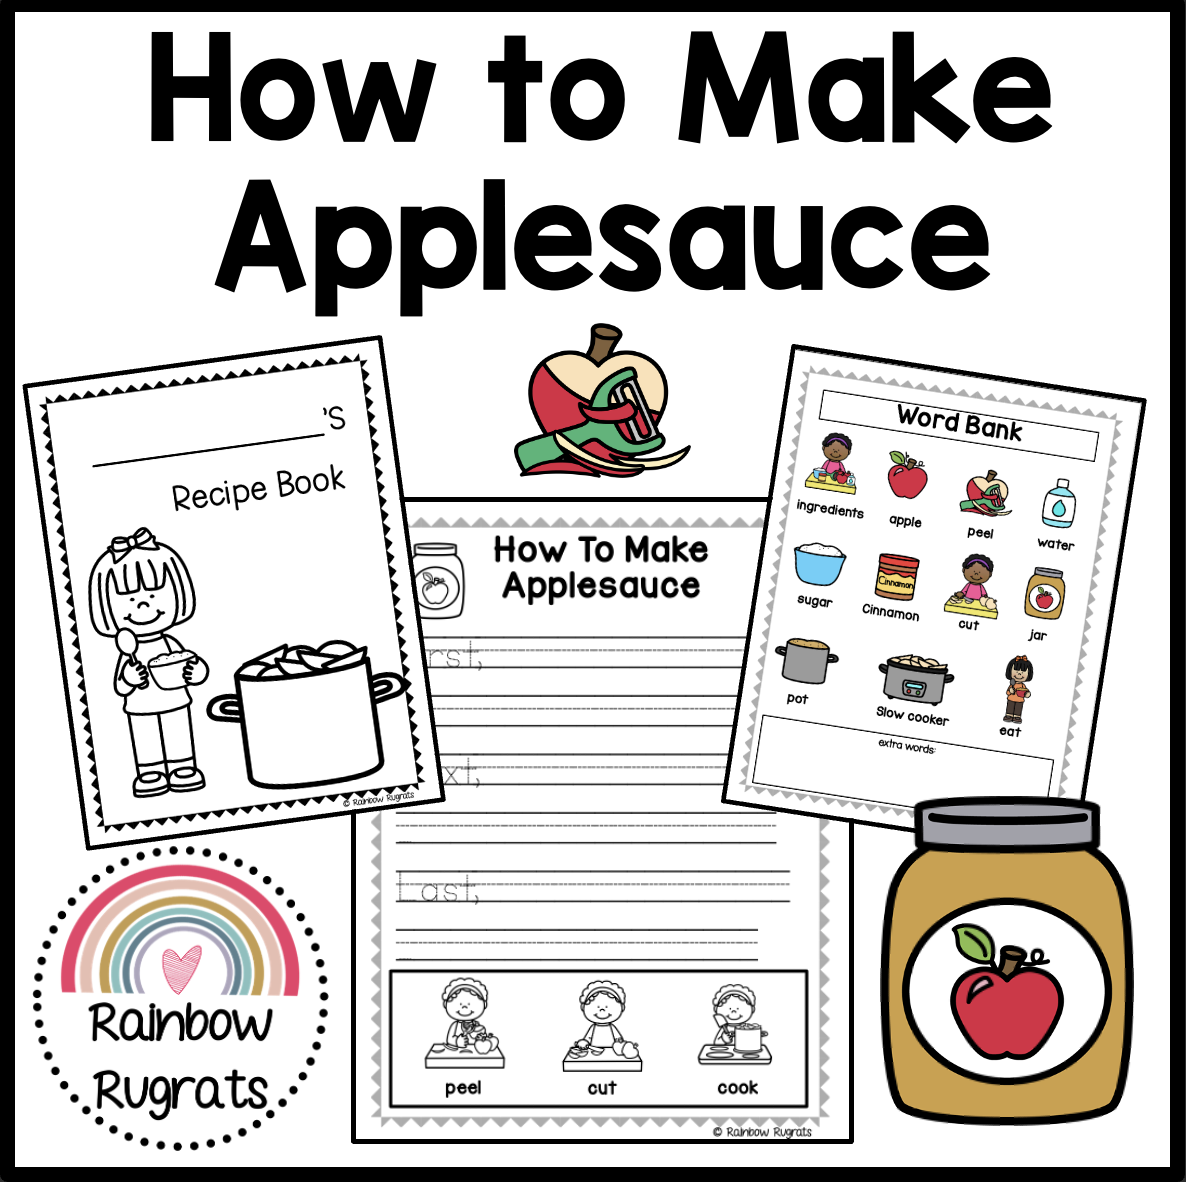 How To Make Applesauce Writing Activity